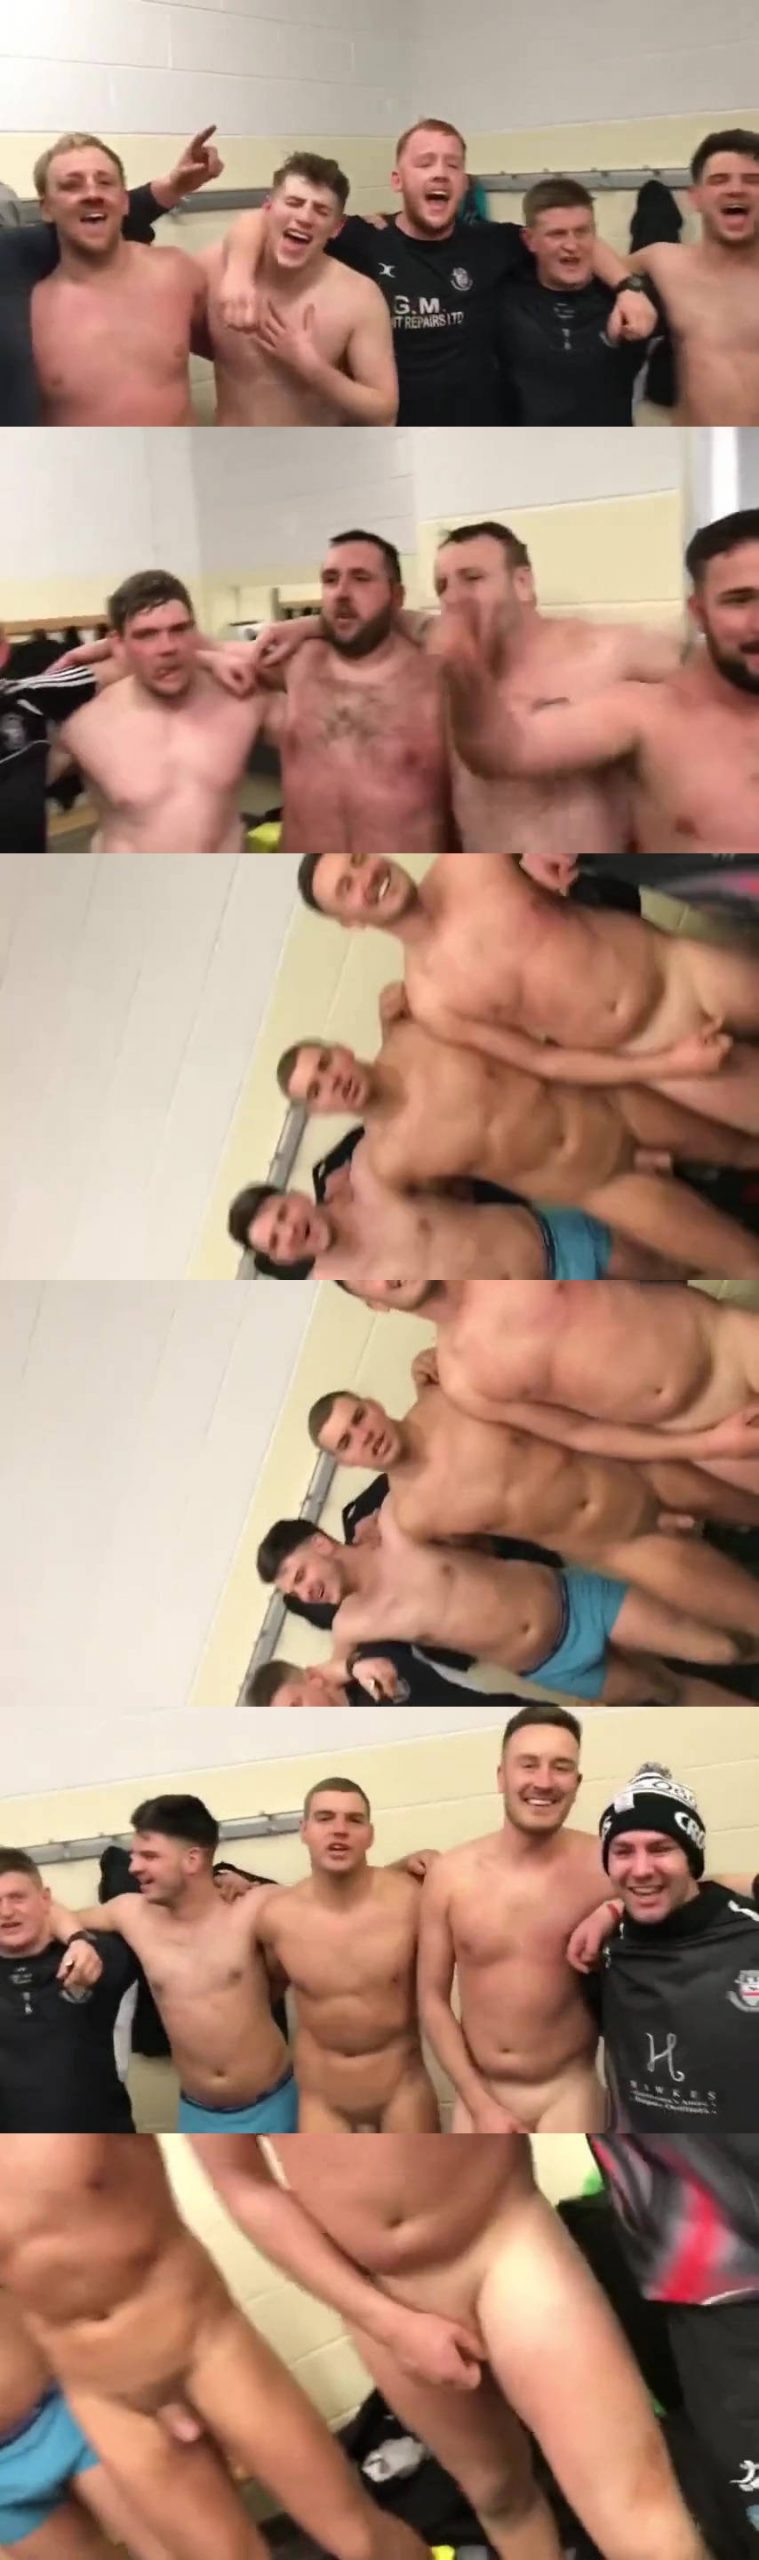 british ruggers naked in locker room